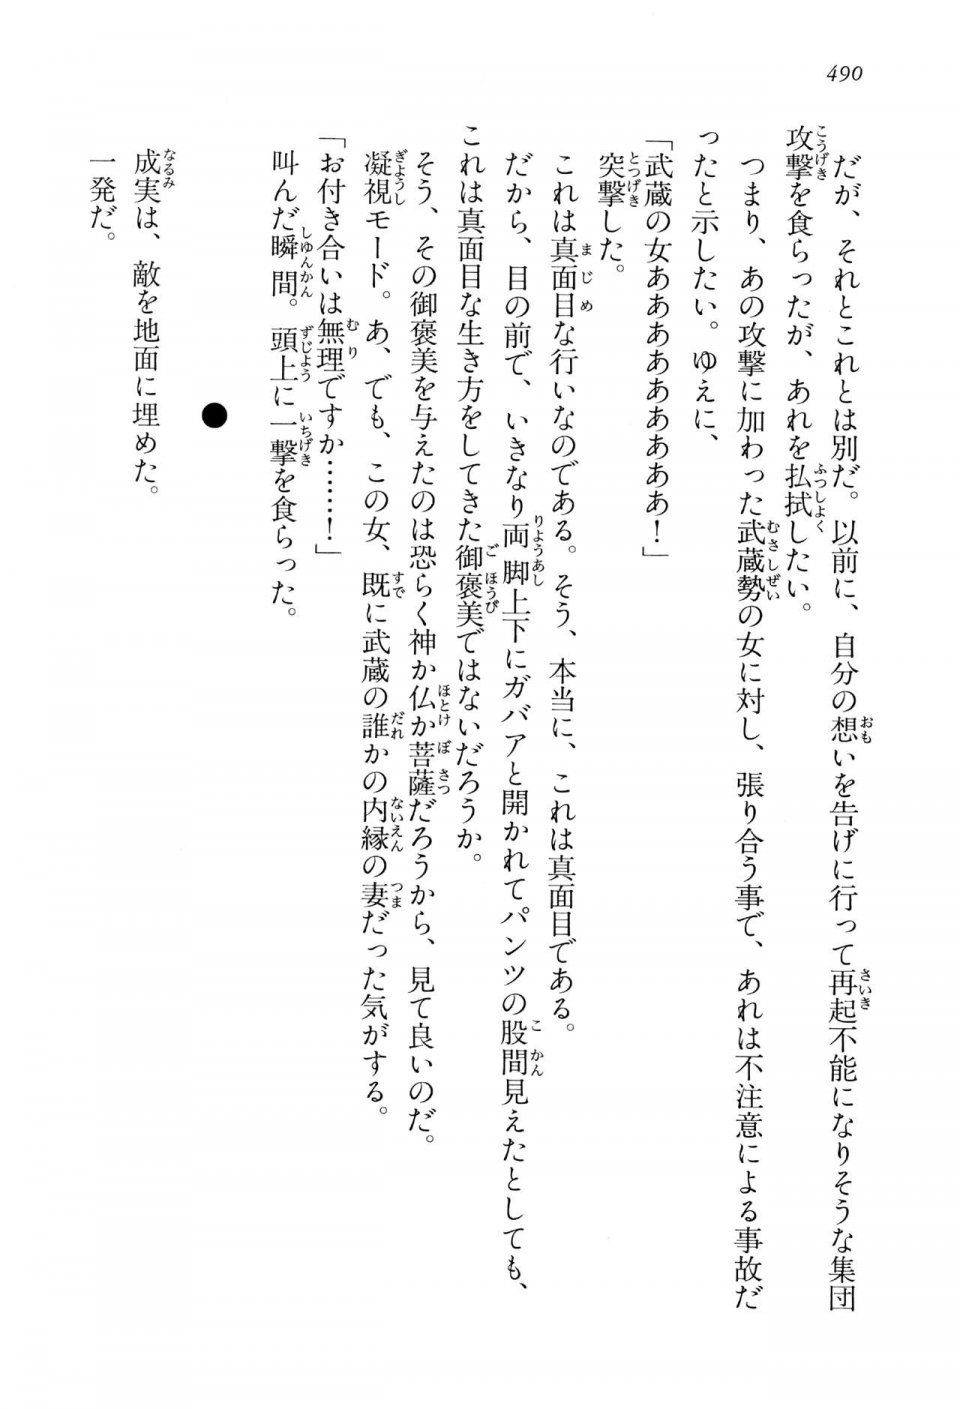 Kyoukai Senjou no Horizon LN Vol 15(6C) Part 1 - Photo #490